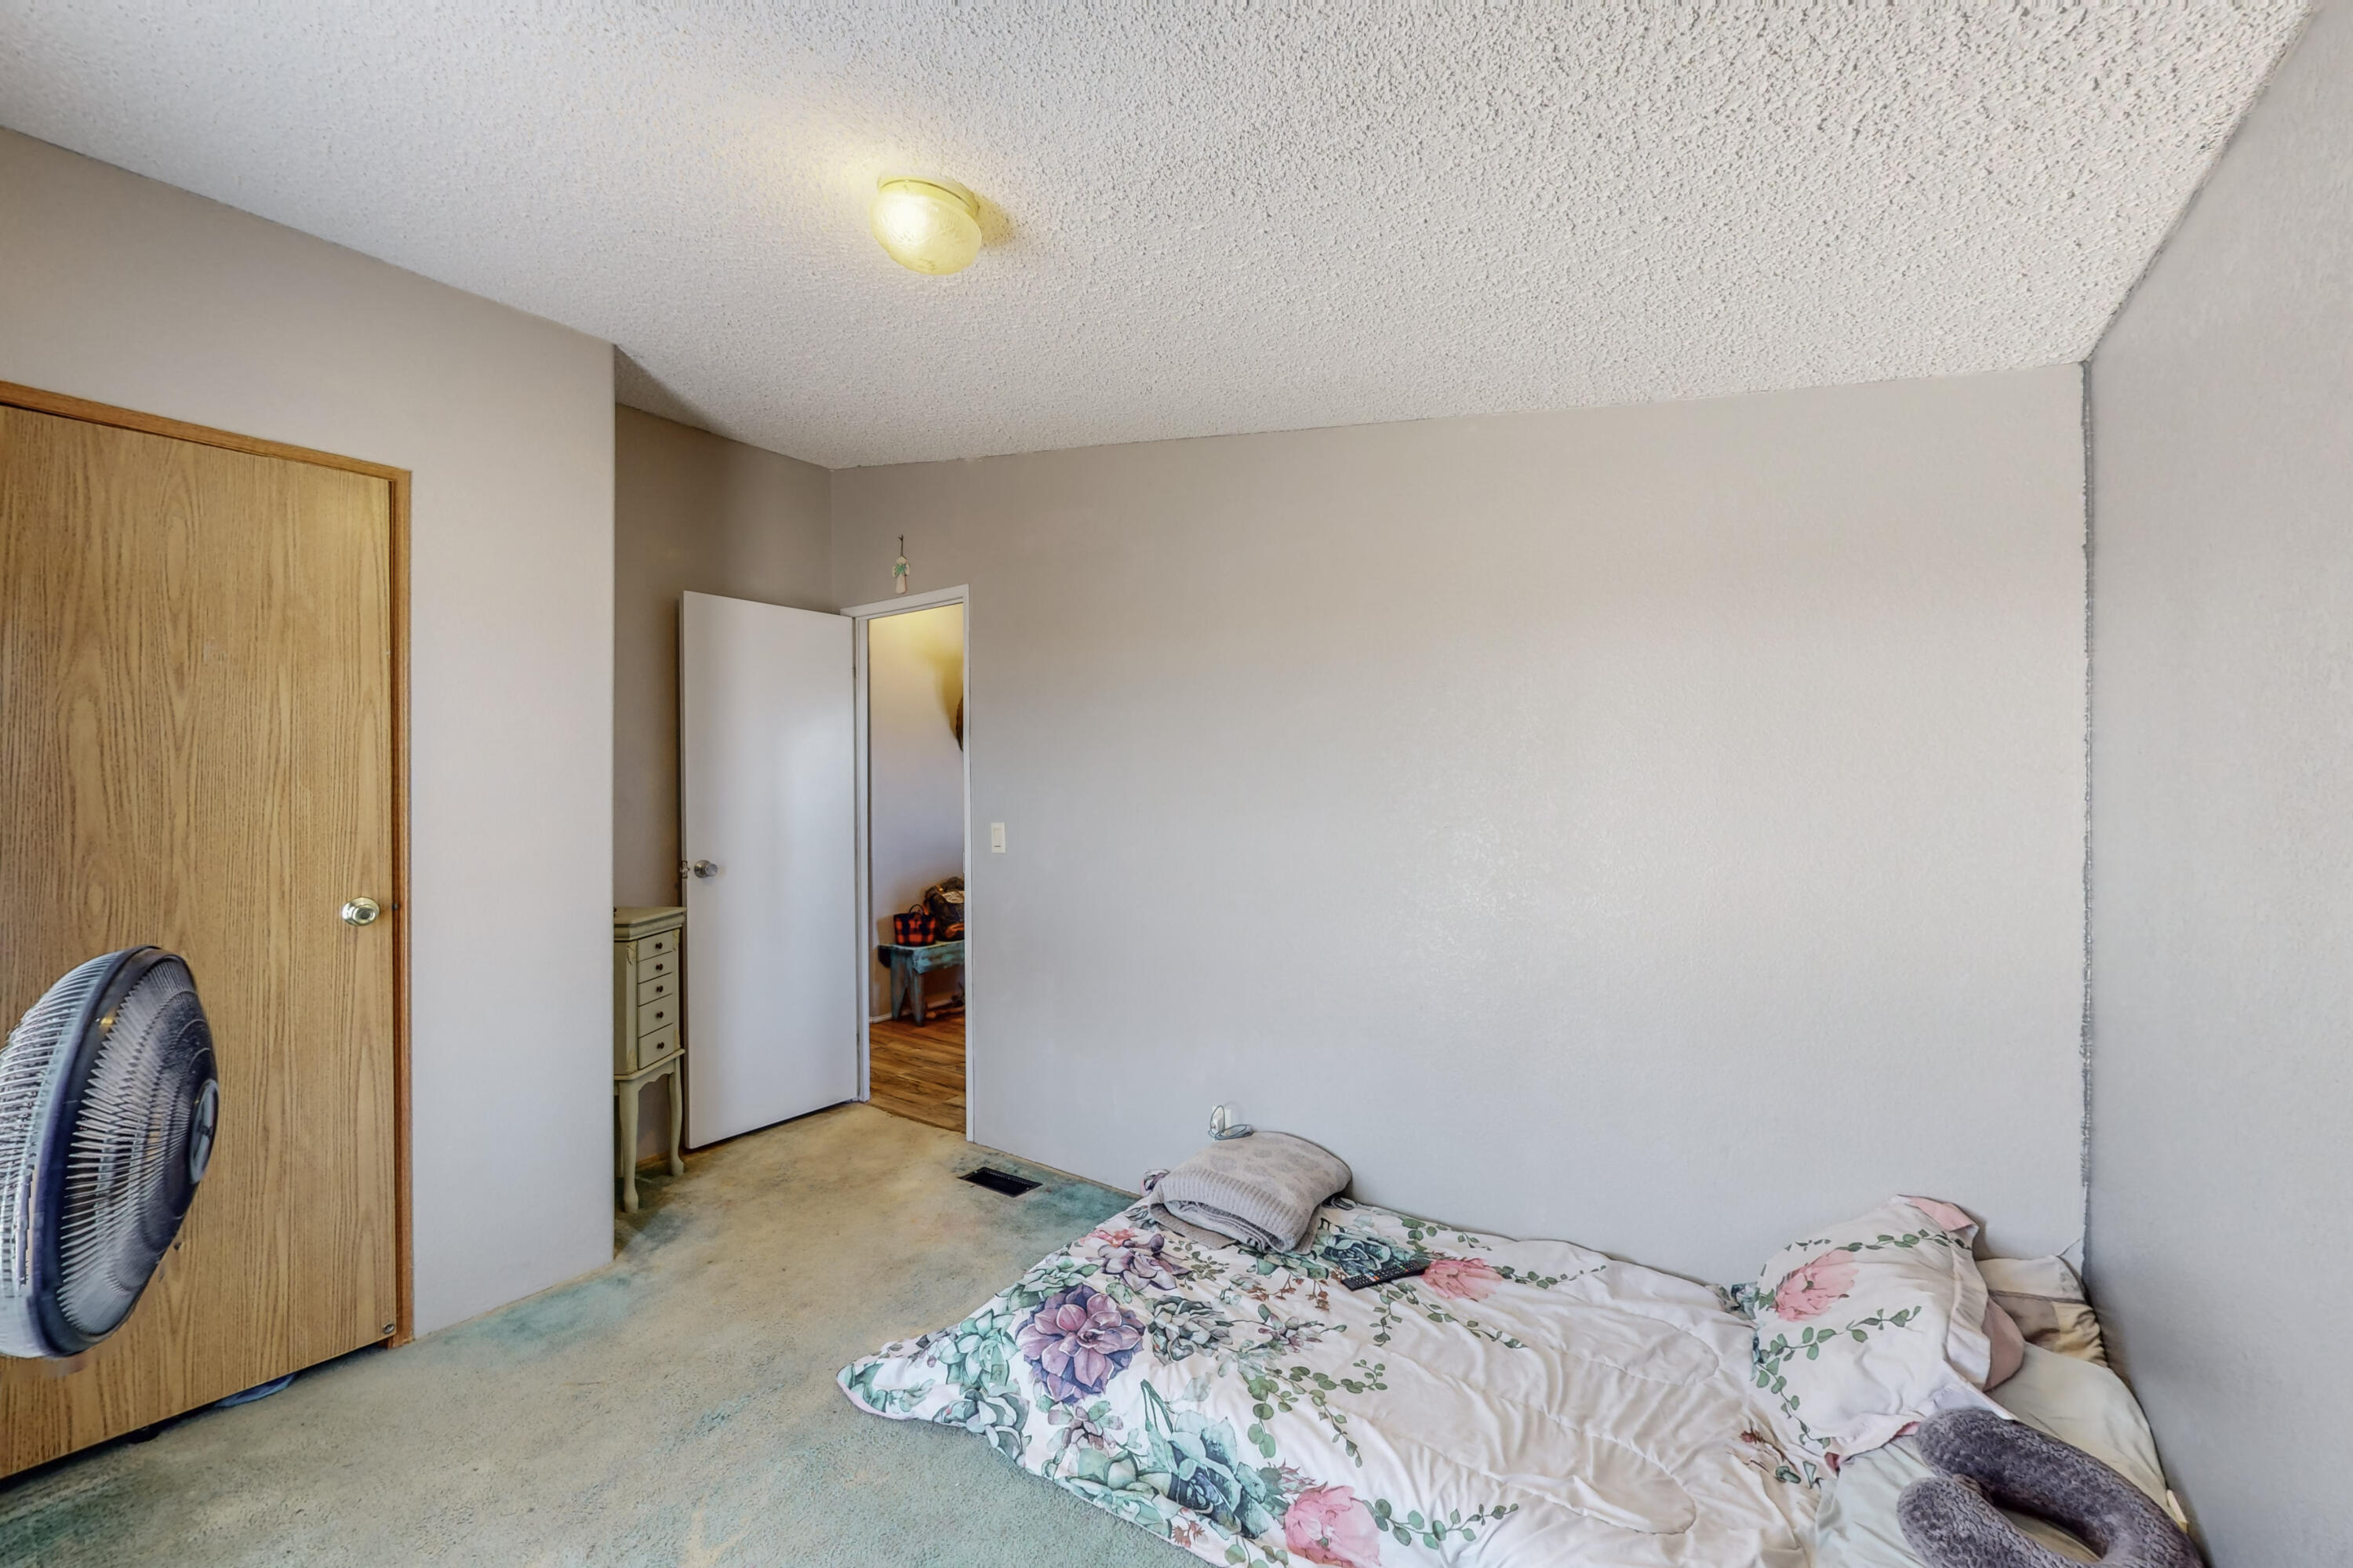 5 East Angelo, Belen, New Mexico 87002, 3 Bedrooms Bedrooms, ,2 BathroomsBathrooms,Residential,For Sale,5 East Angelo,1038045